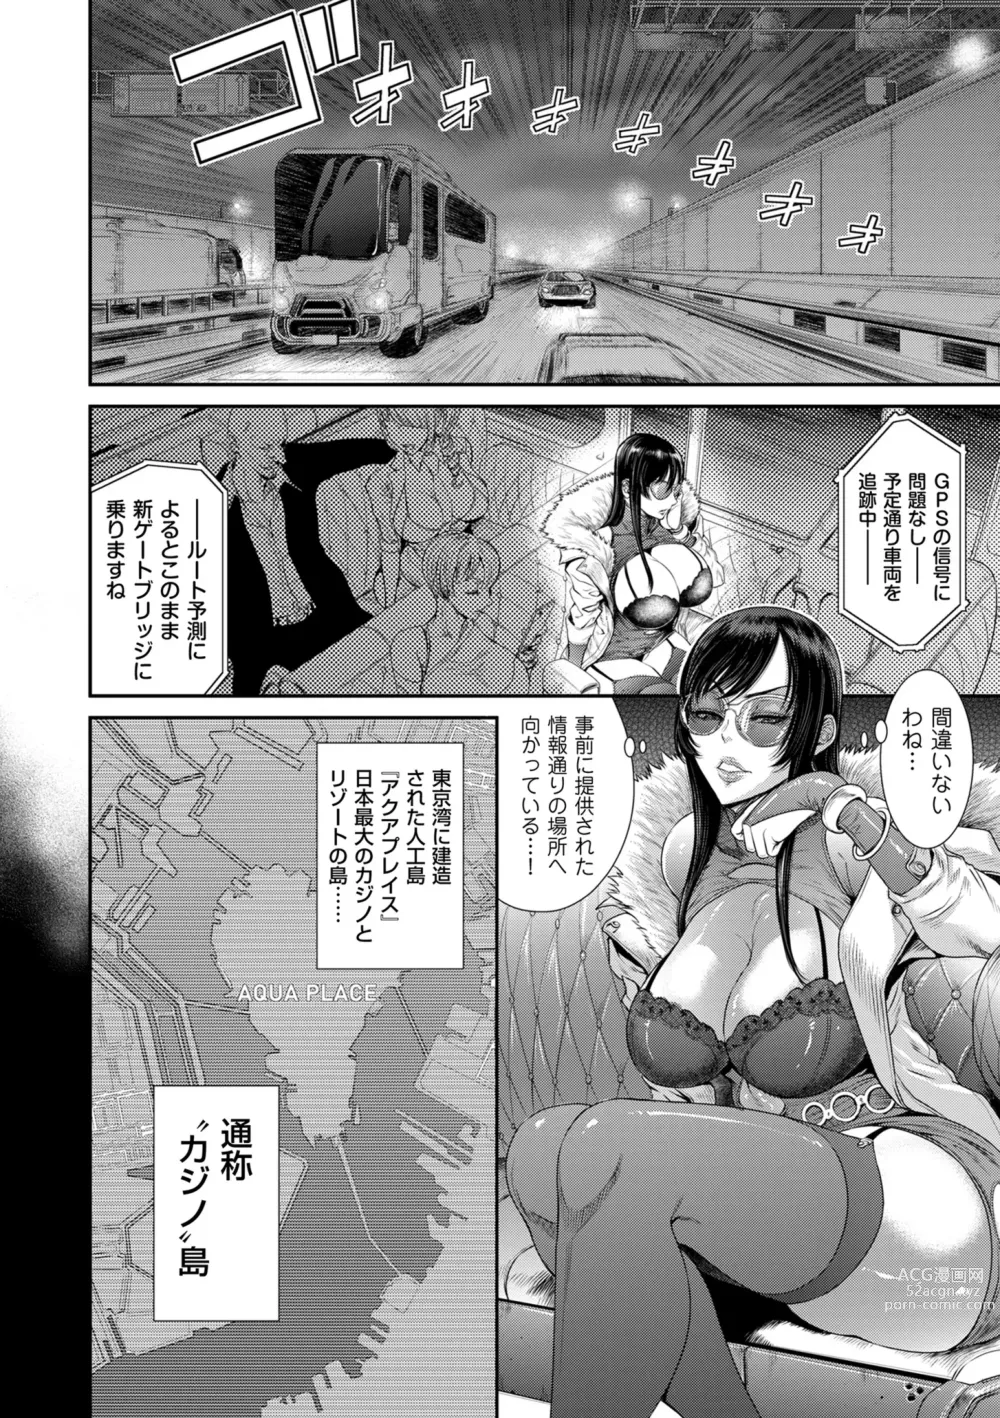 Page 14 of manga P. S. C. Sennyuu sousa-kan Reiko